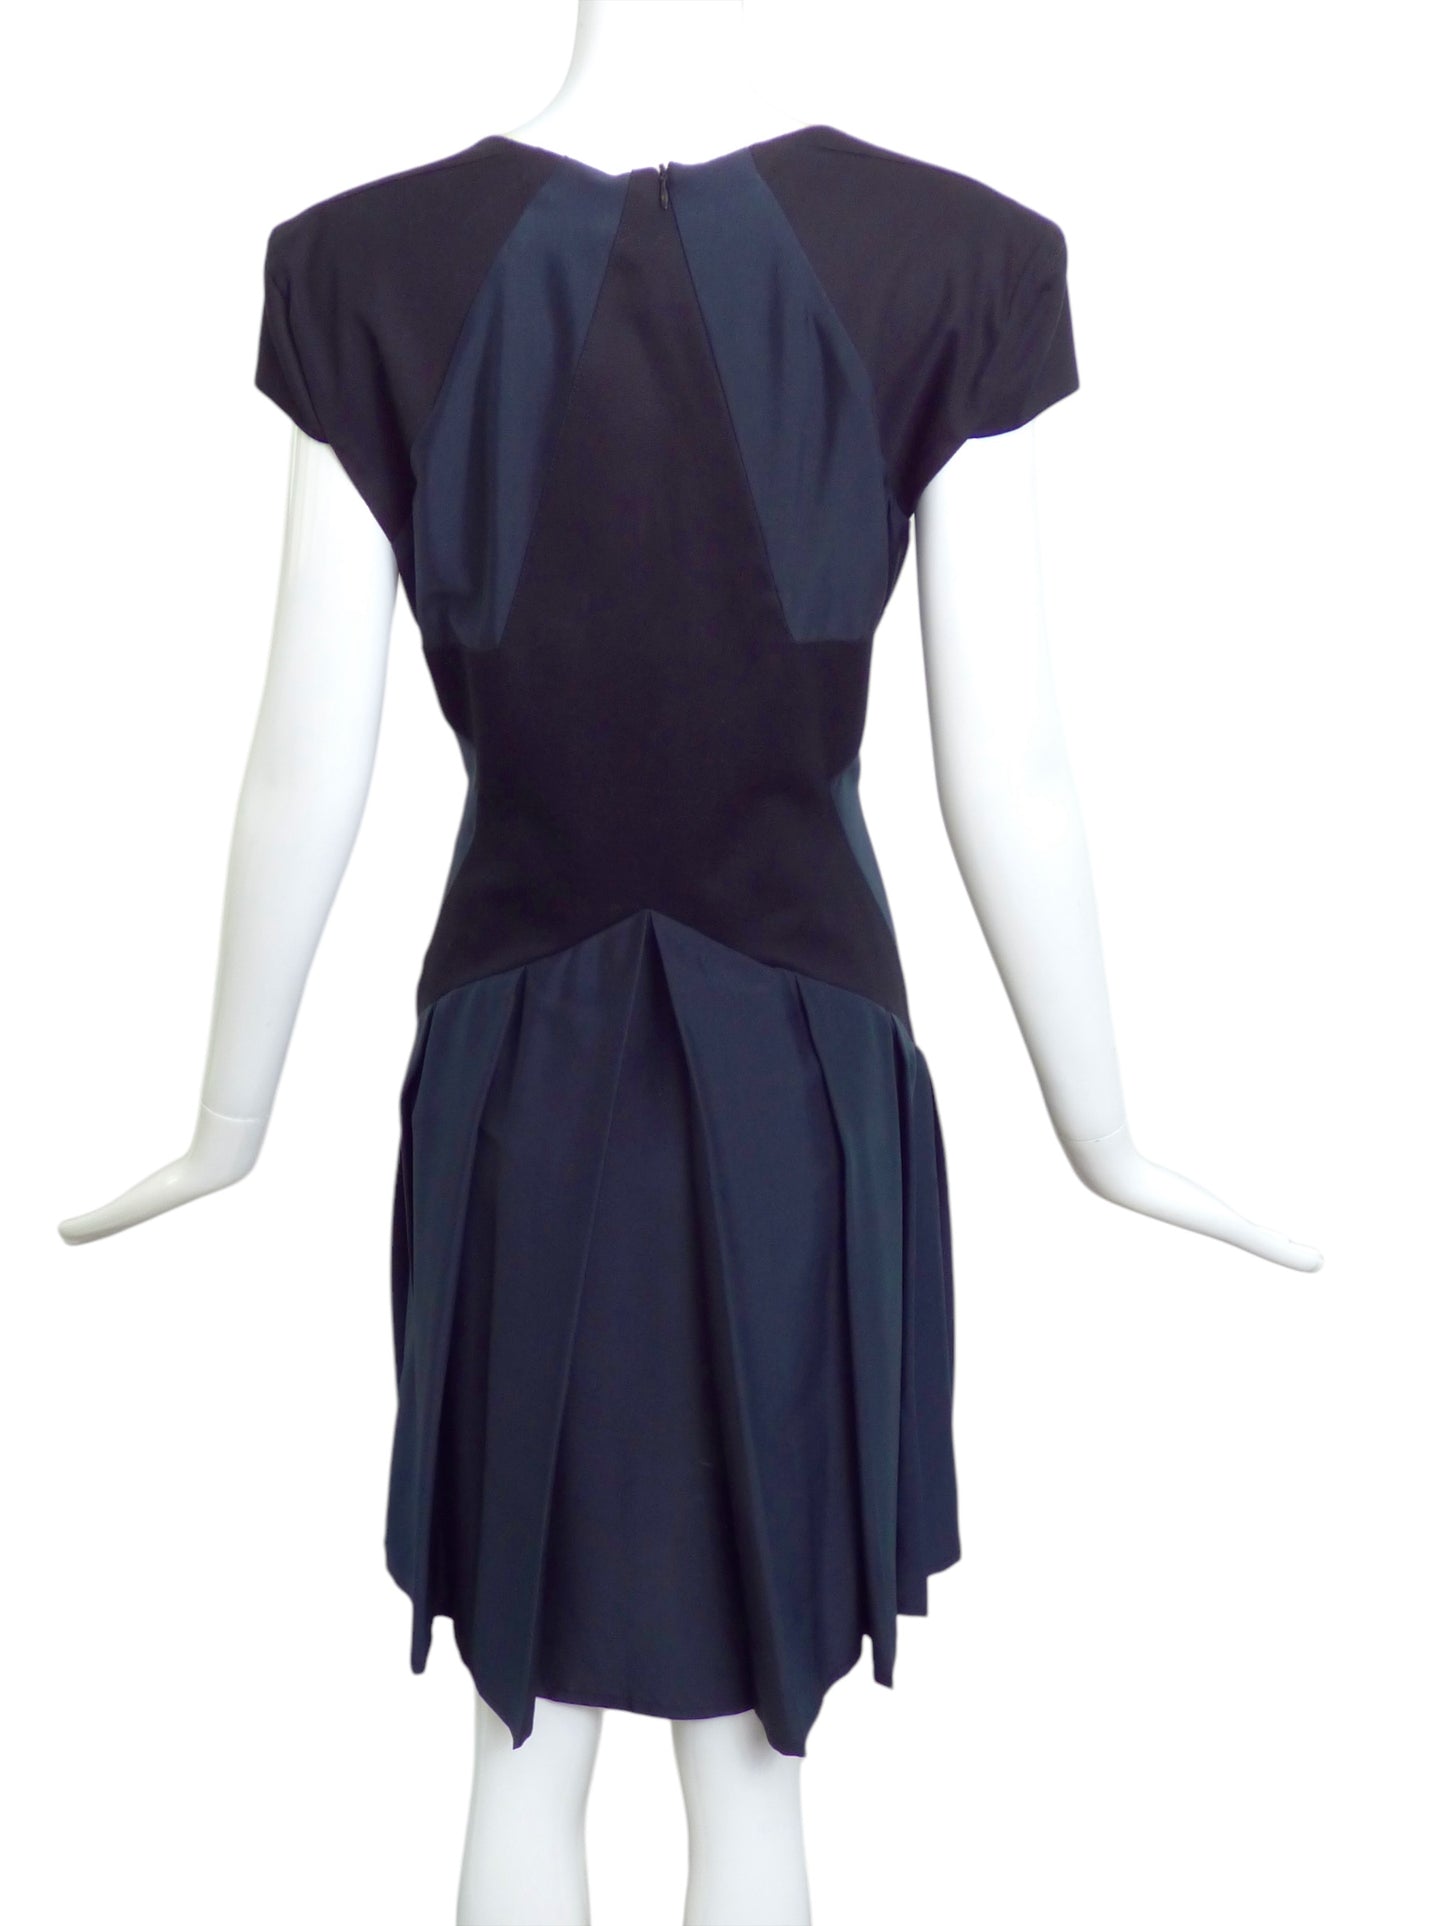 JC de CASTELBAJAC- NWT 2012 Silk Star Dress, Size 8